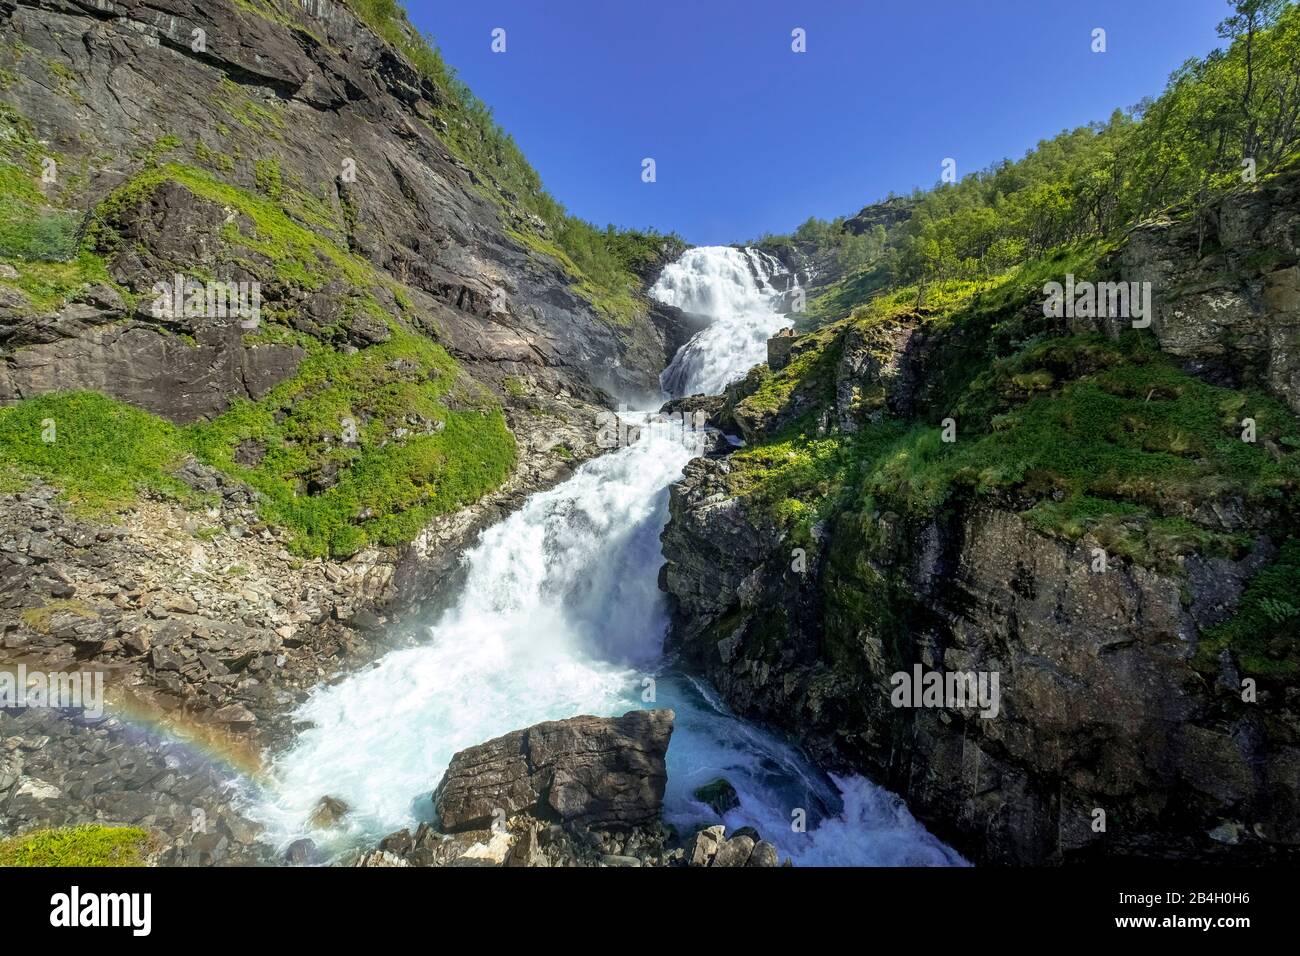 Cascata di Kjosfossen, cascata vicino a Fureberget, pareti rocciose, alberi, cielo, Flåm, Sogn og Fjordane, Norvegia, Scandinavia, Europa Foto Stock